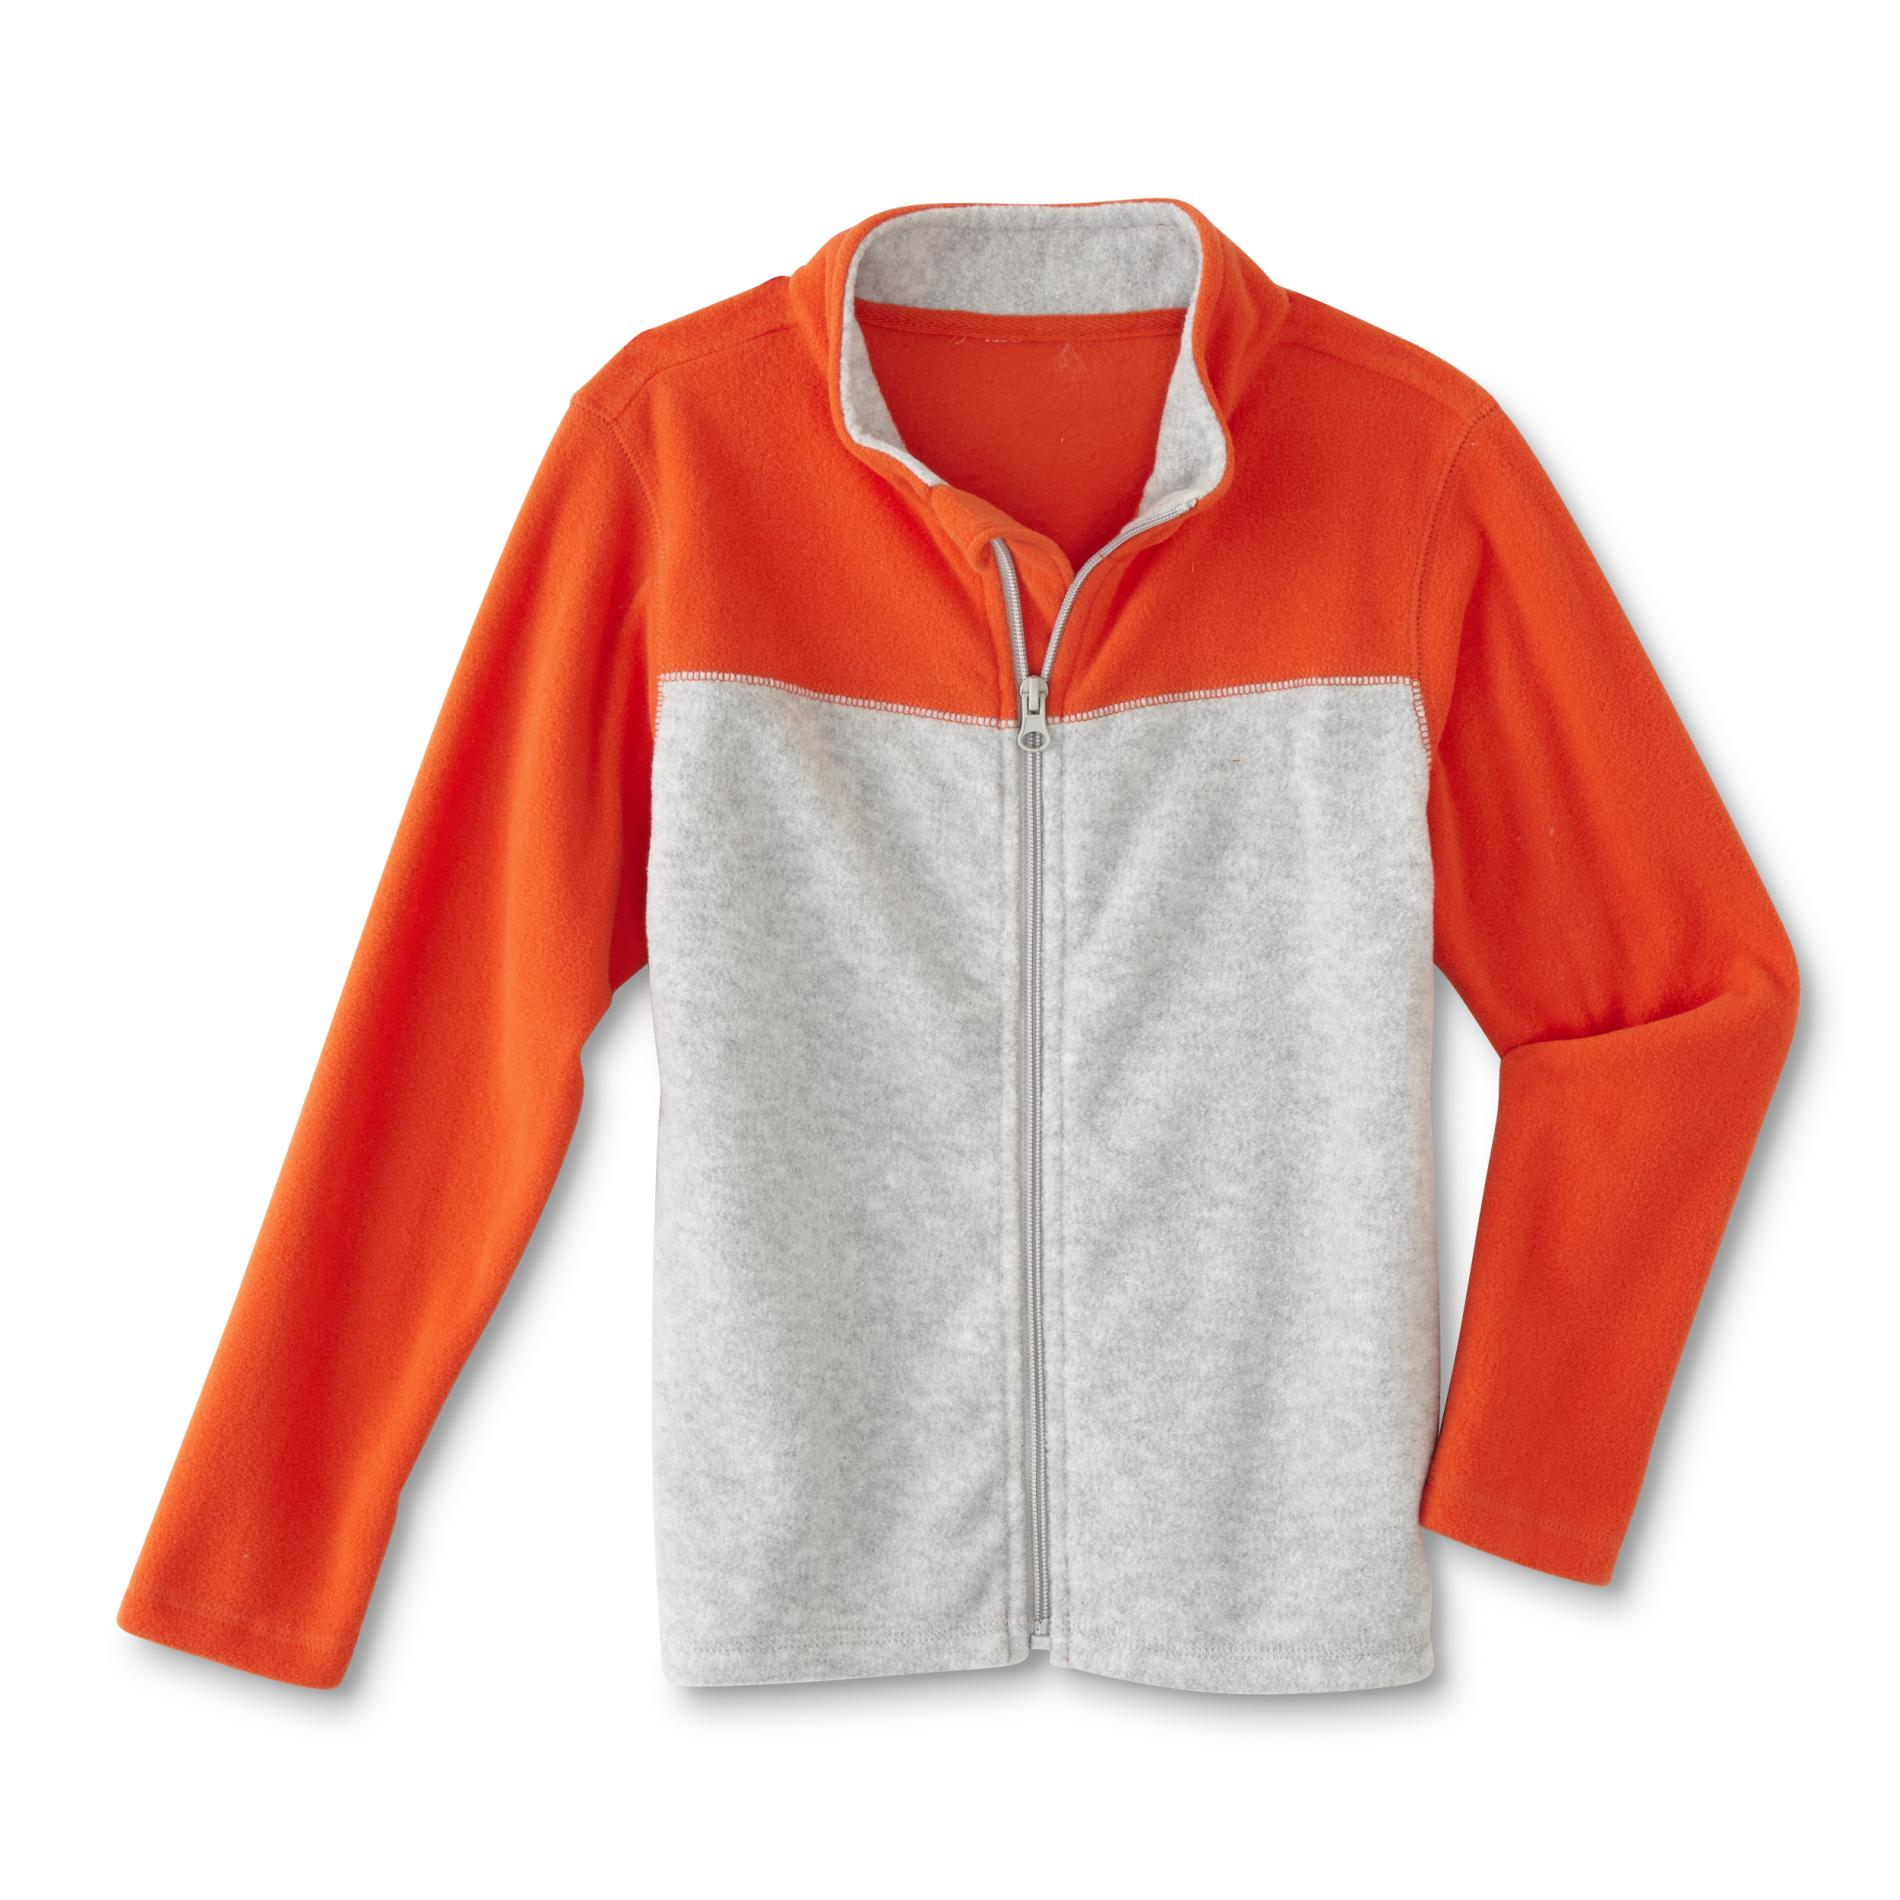 Toughskins Infant & Toddler Boys' Fleece Jacket - Colorblock